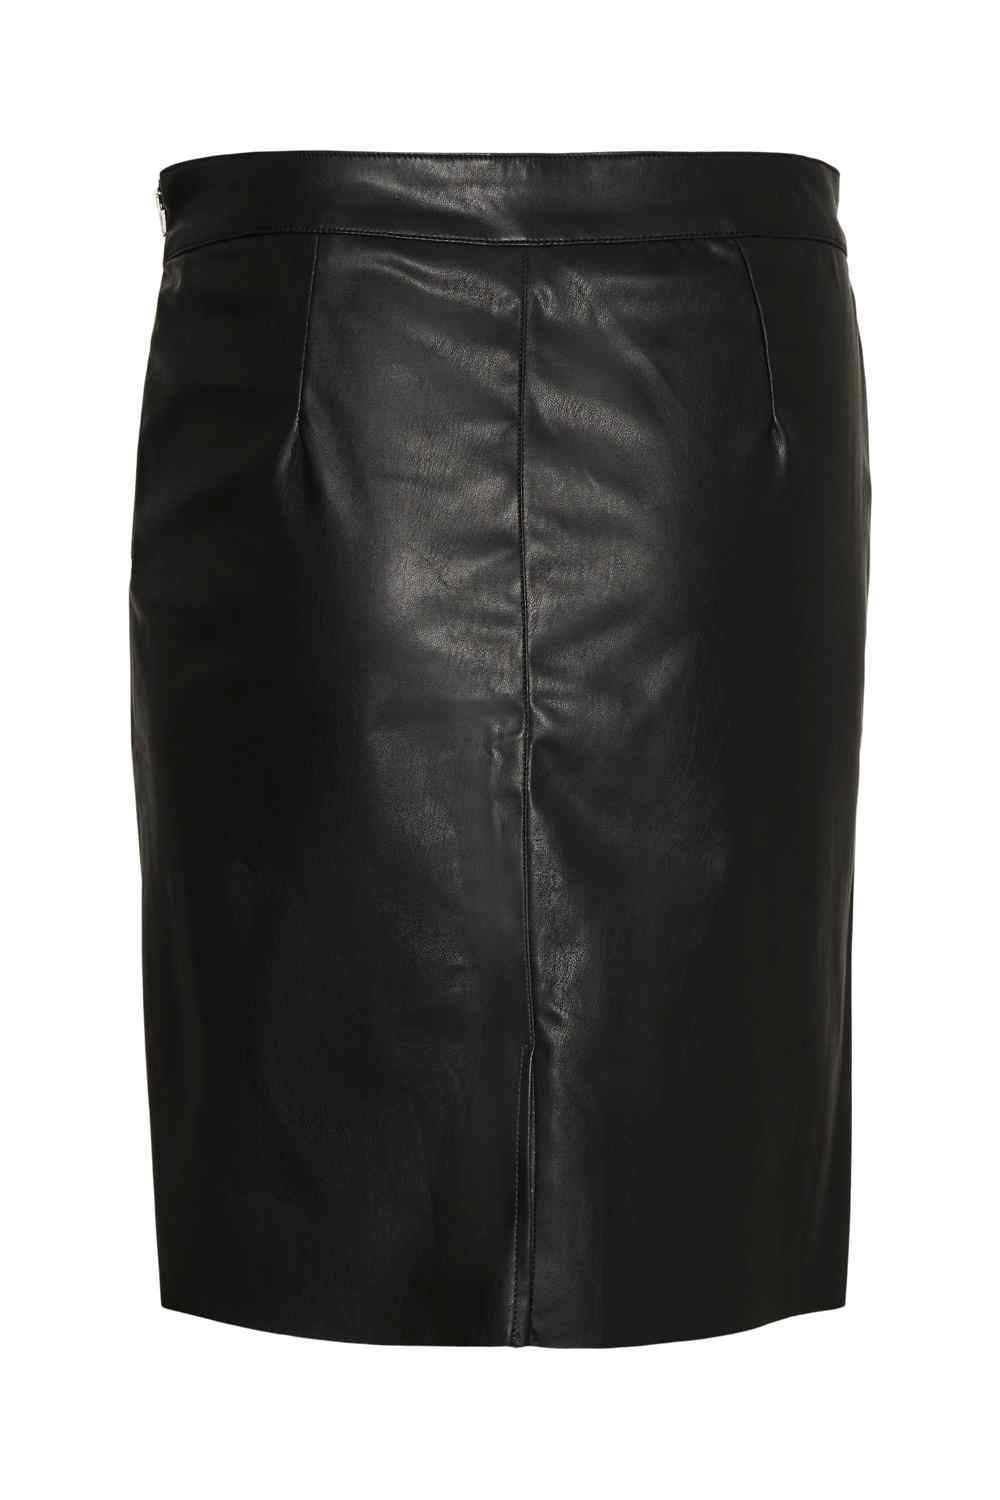 Vero Moda Olympia Skirt - Black 6 Shaws Department Stores